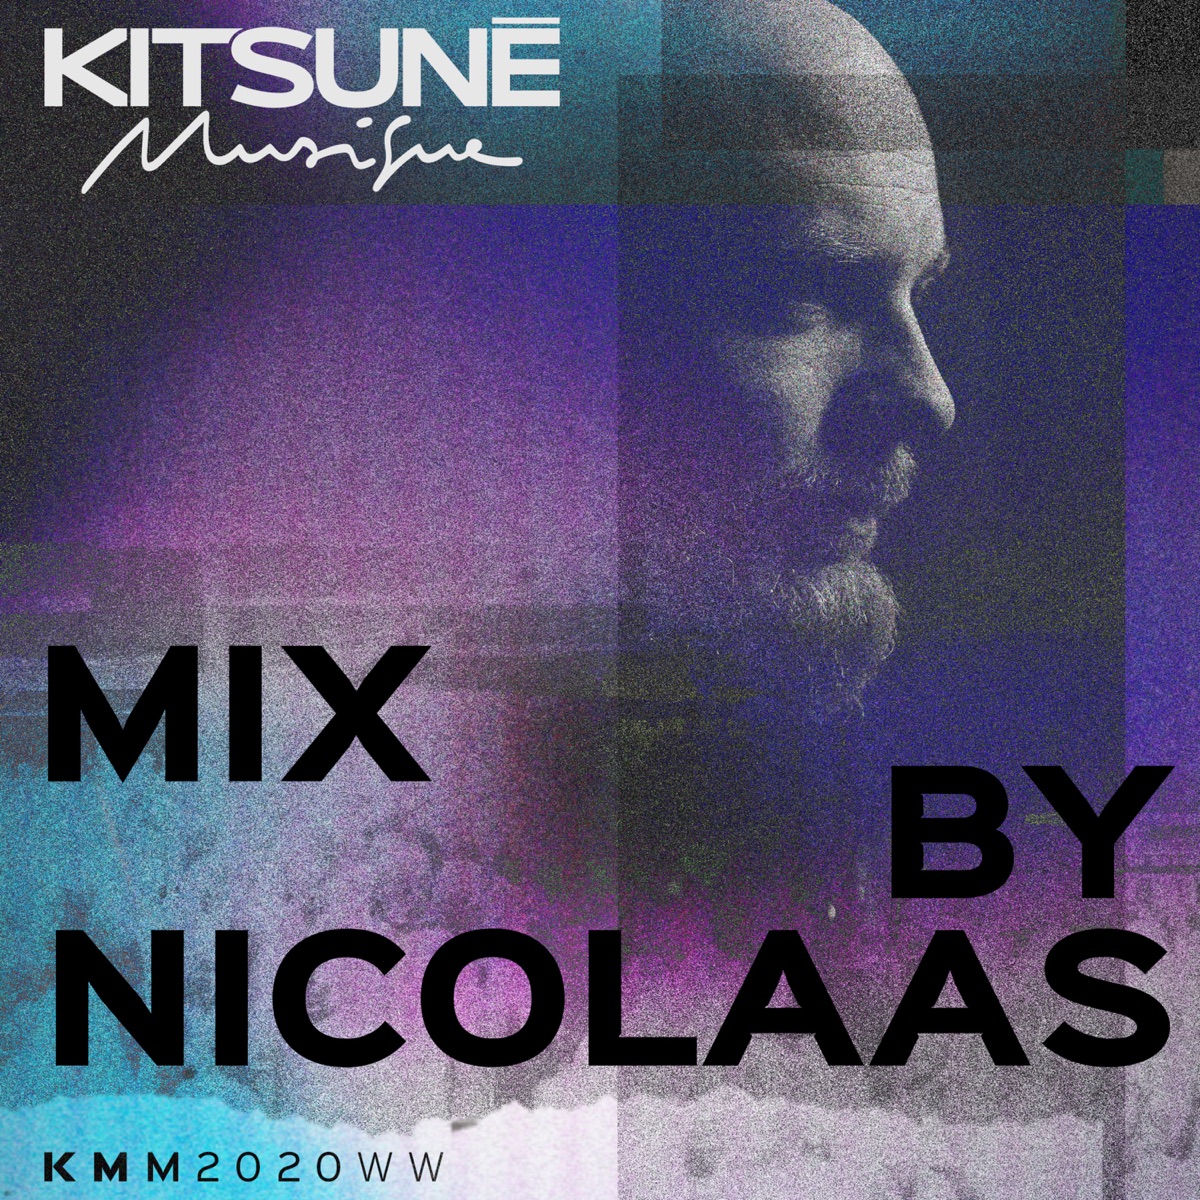 NICOLAAS - Kitsuné Musique Mixed by Nicolaas (DJ Mix)